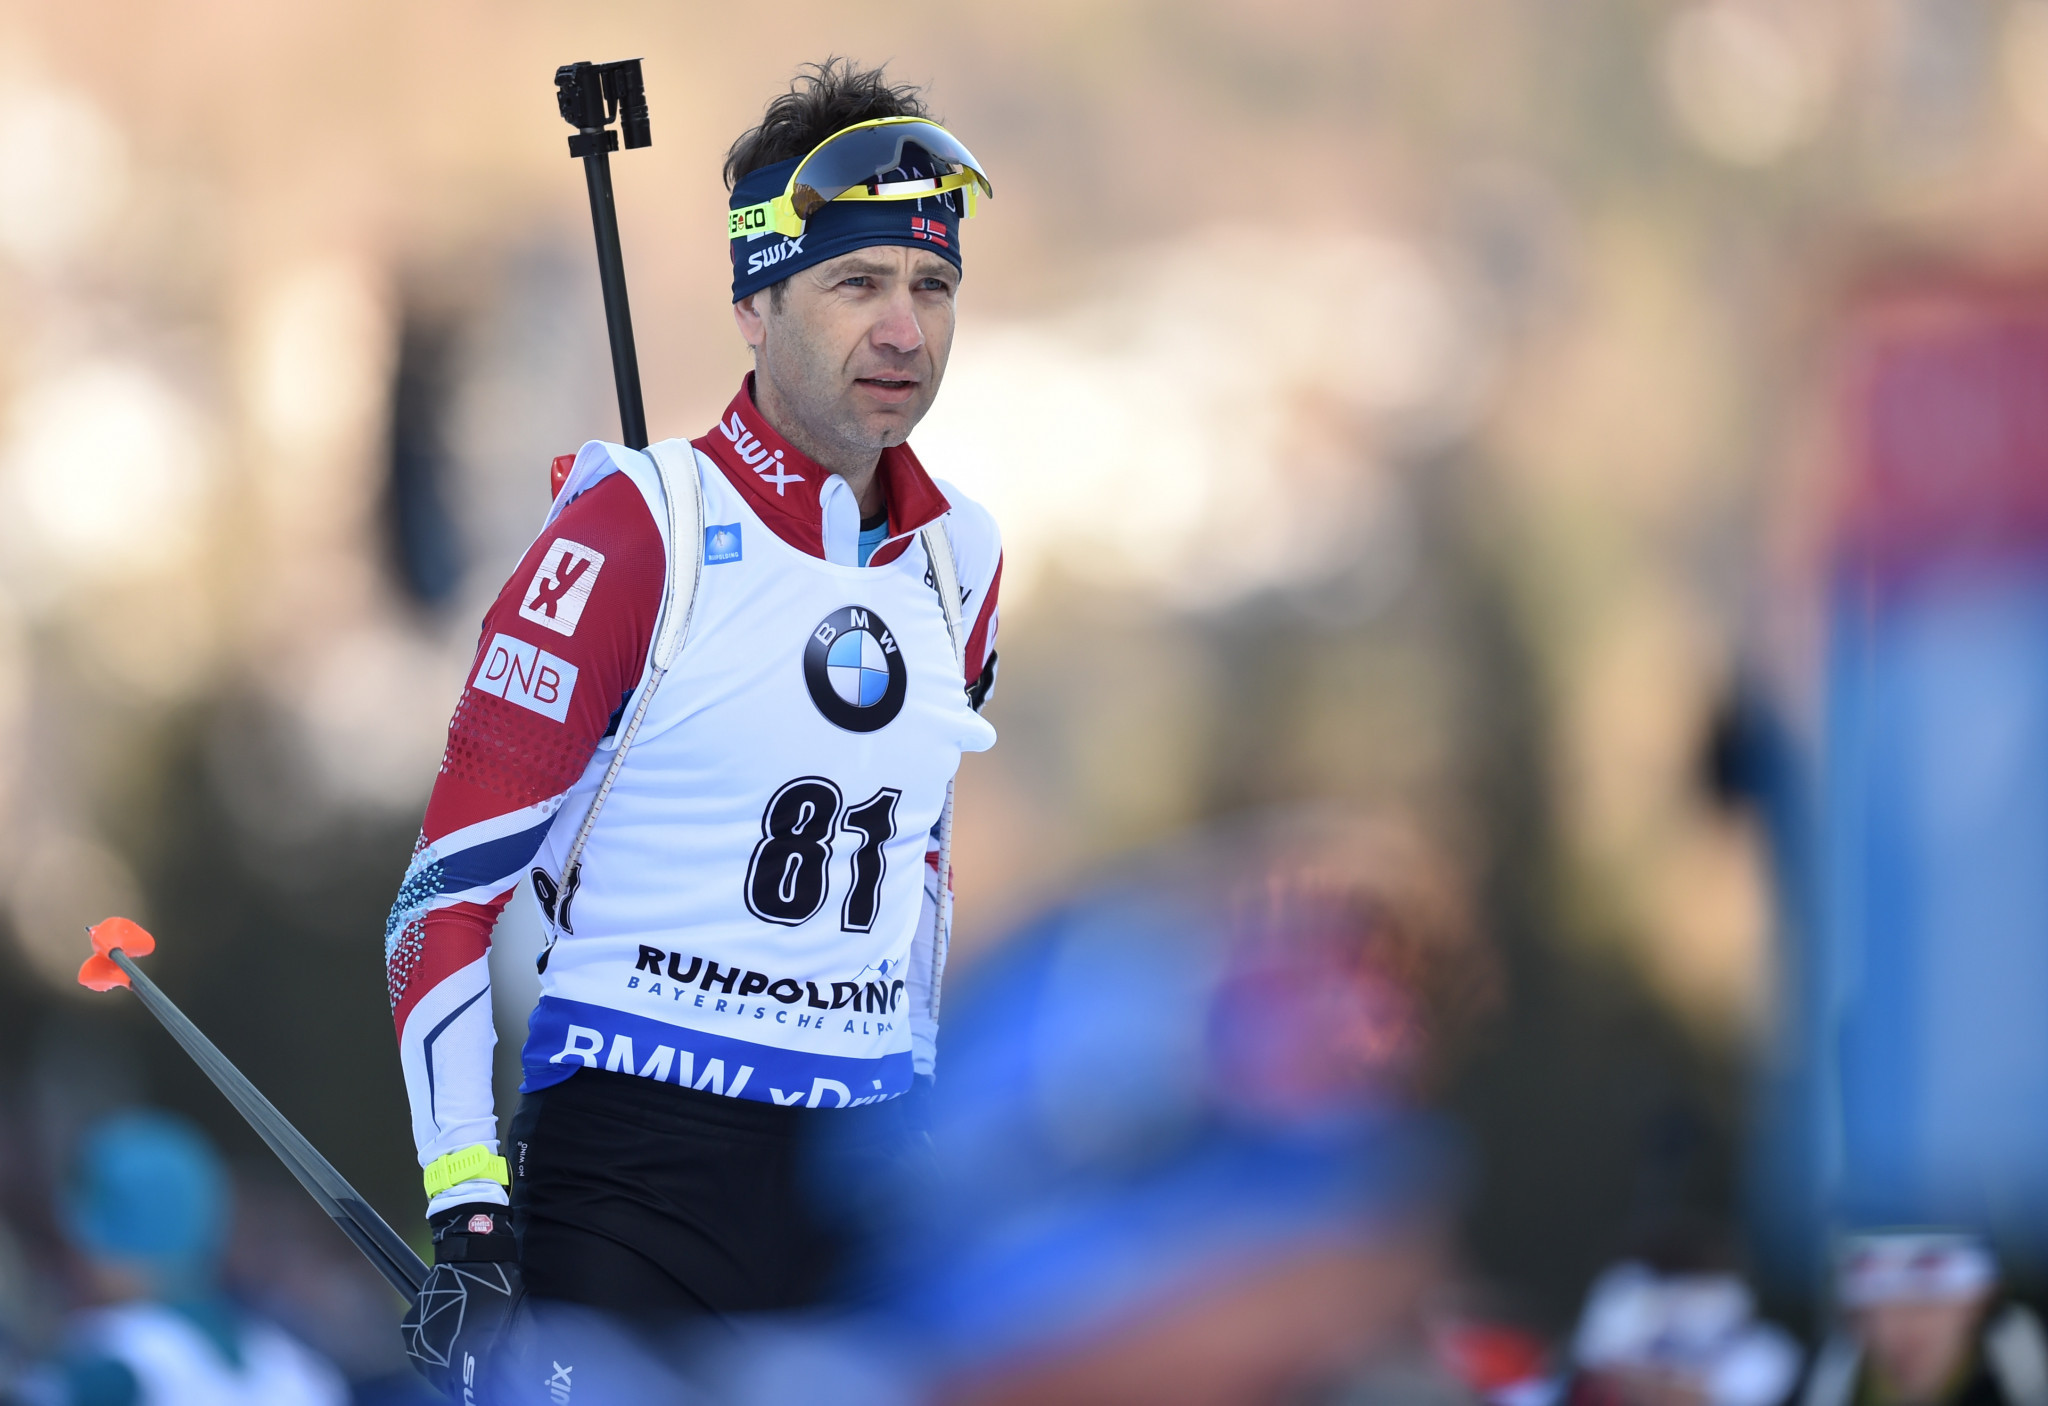 Most successful Winter Olympian Bjørndalen not selected for Pyeongchang 2018